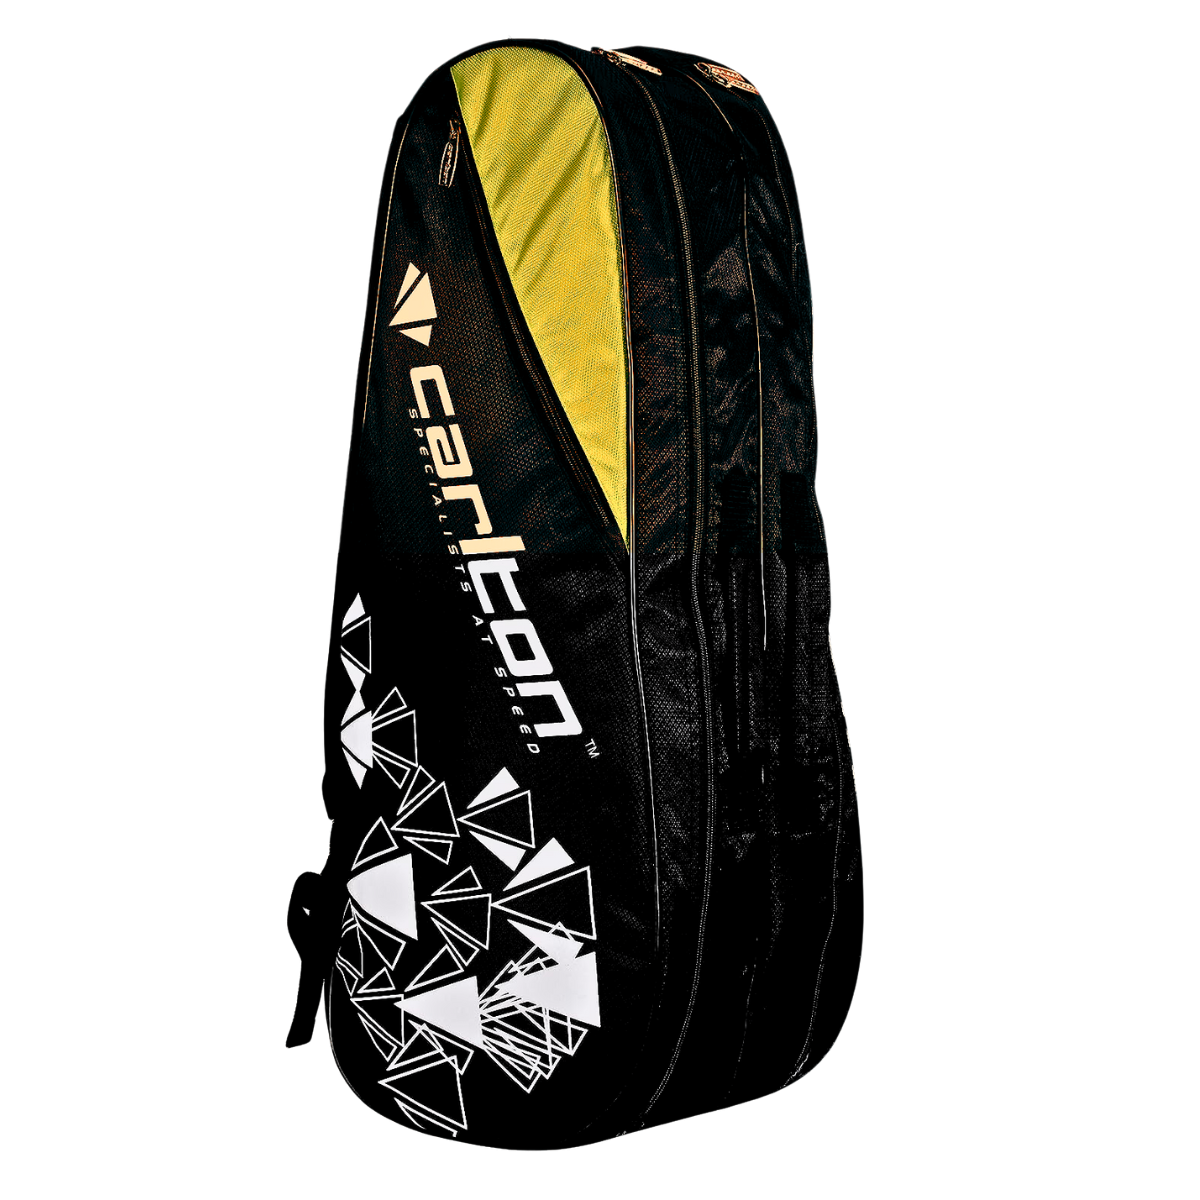 Carlton Vapour Trial 2 Compartment Badminton Kit Bag (Black/Yellow)